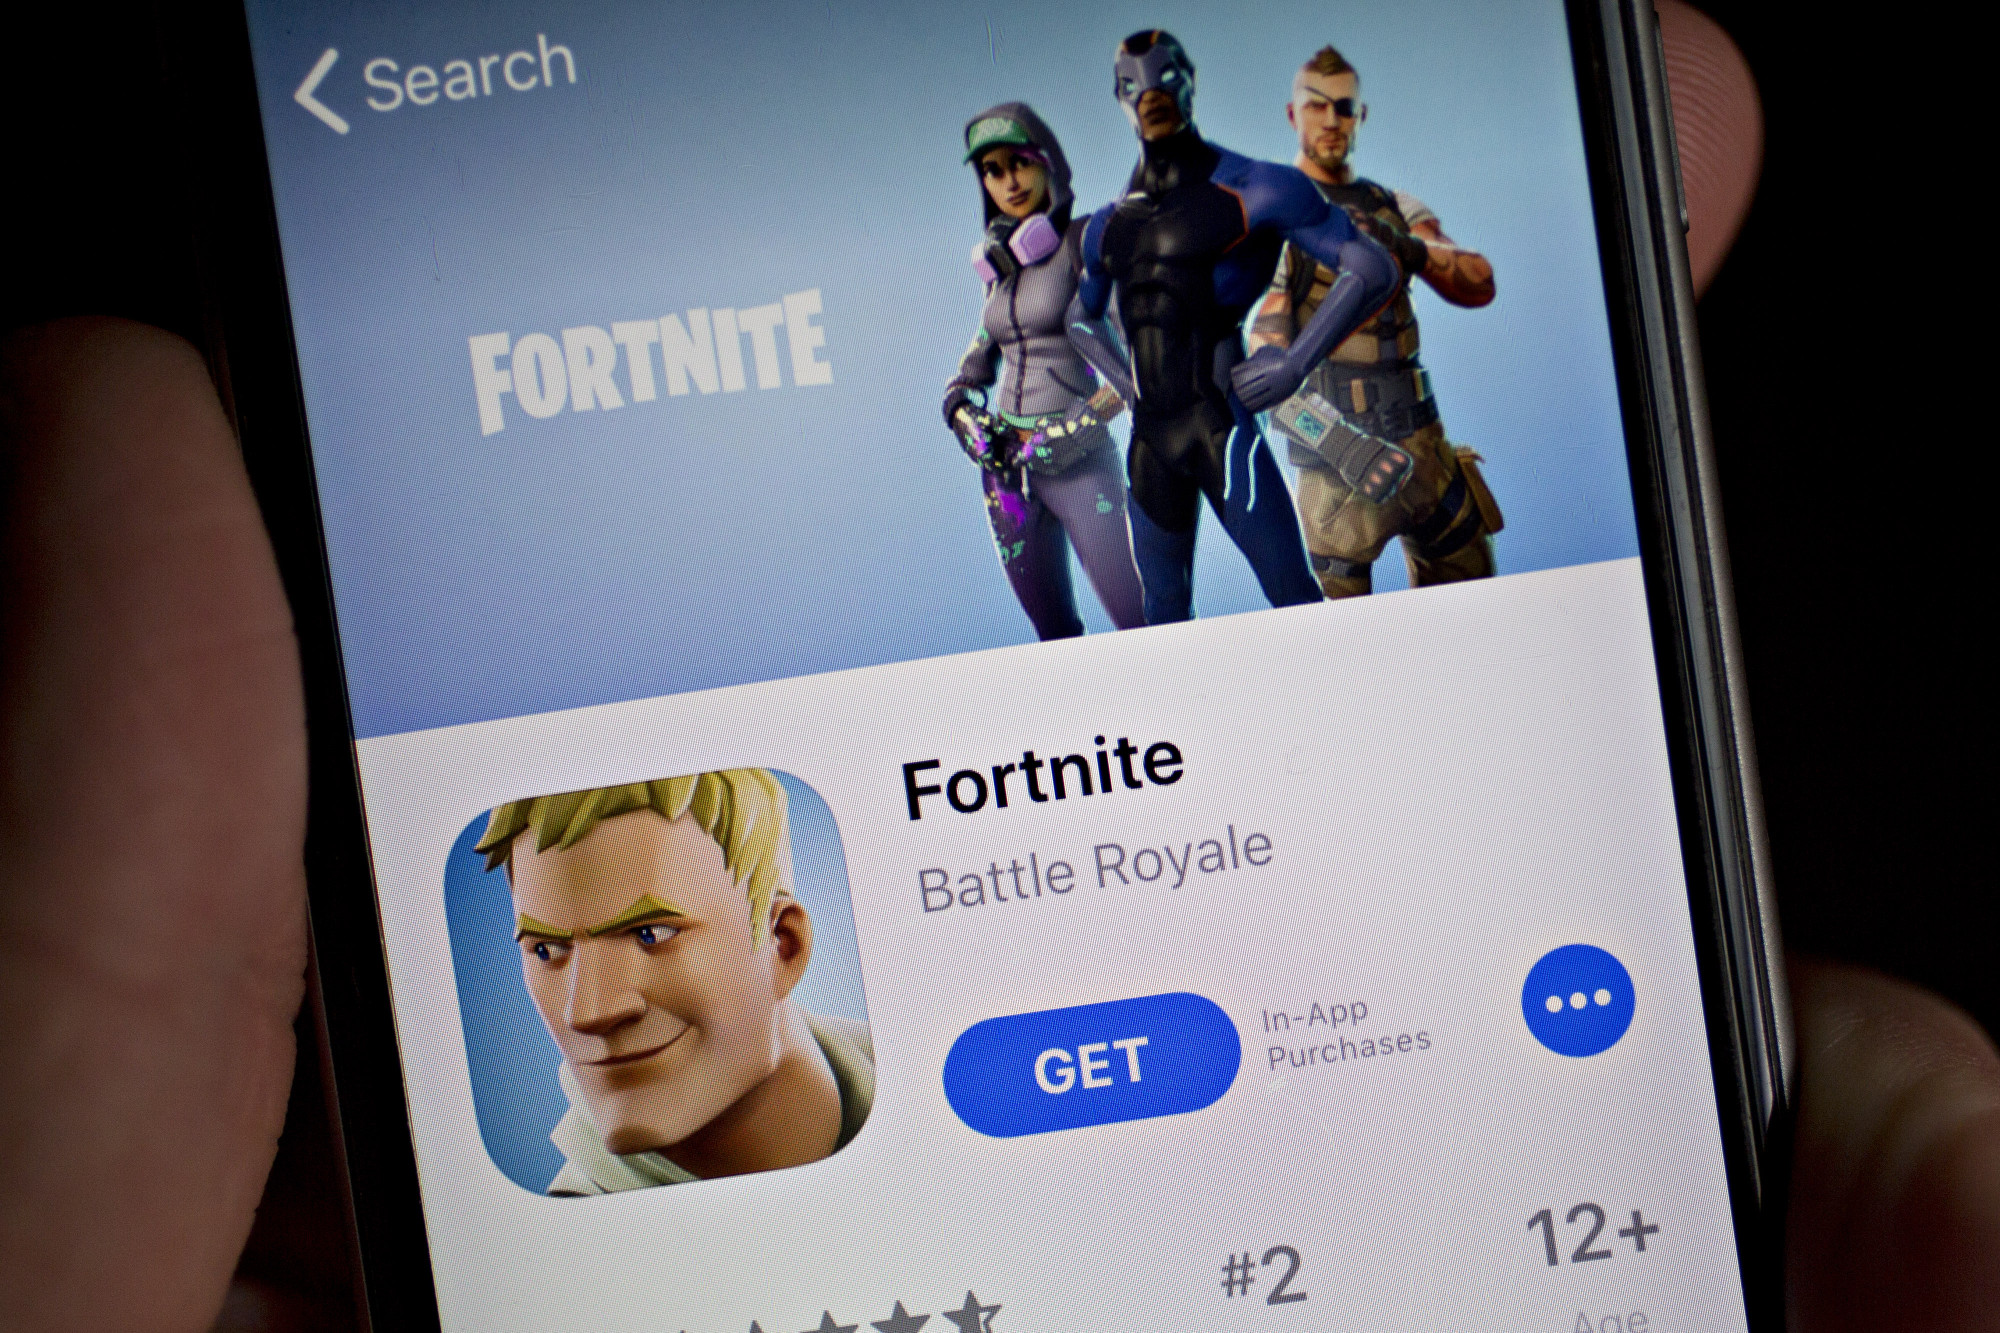 Xbox makes 'Fortnite' game free to play on iPhones, Telecom News, ET Telecom